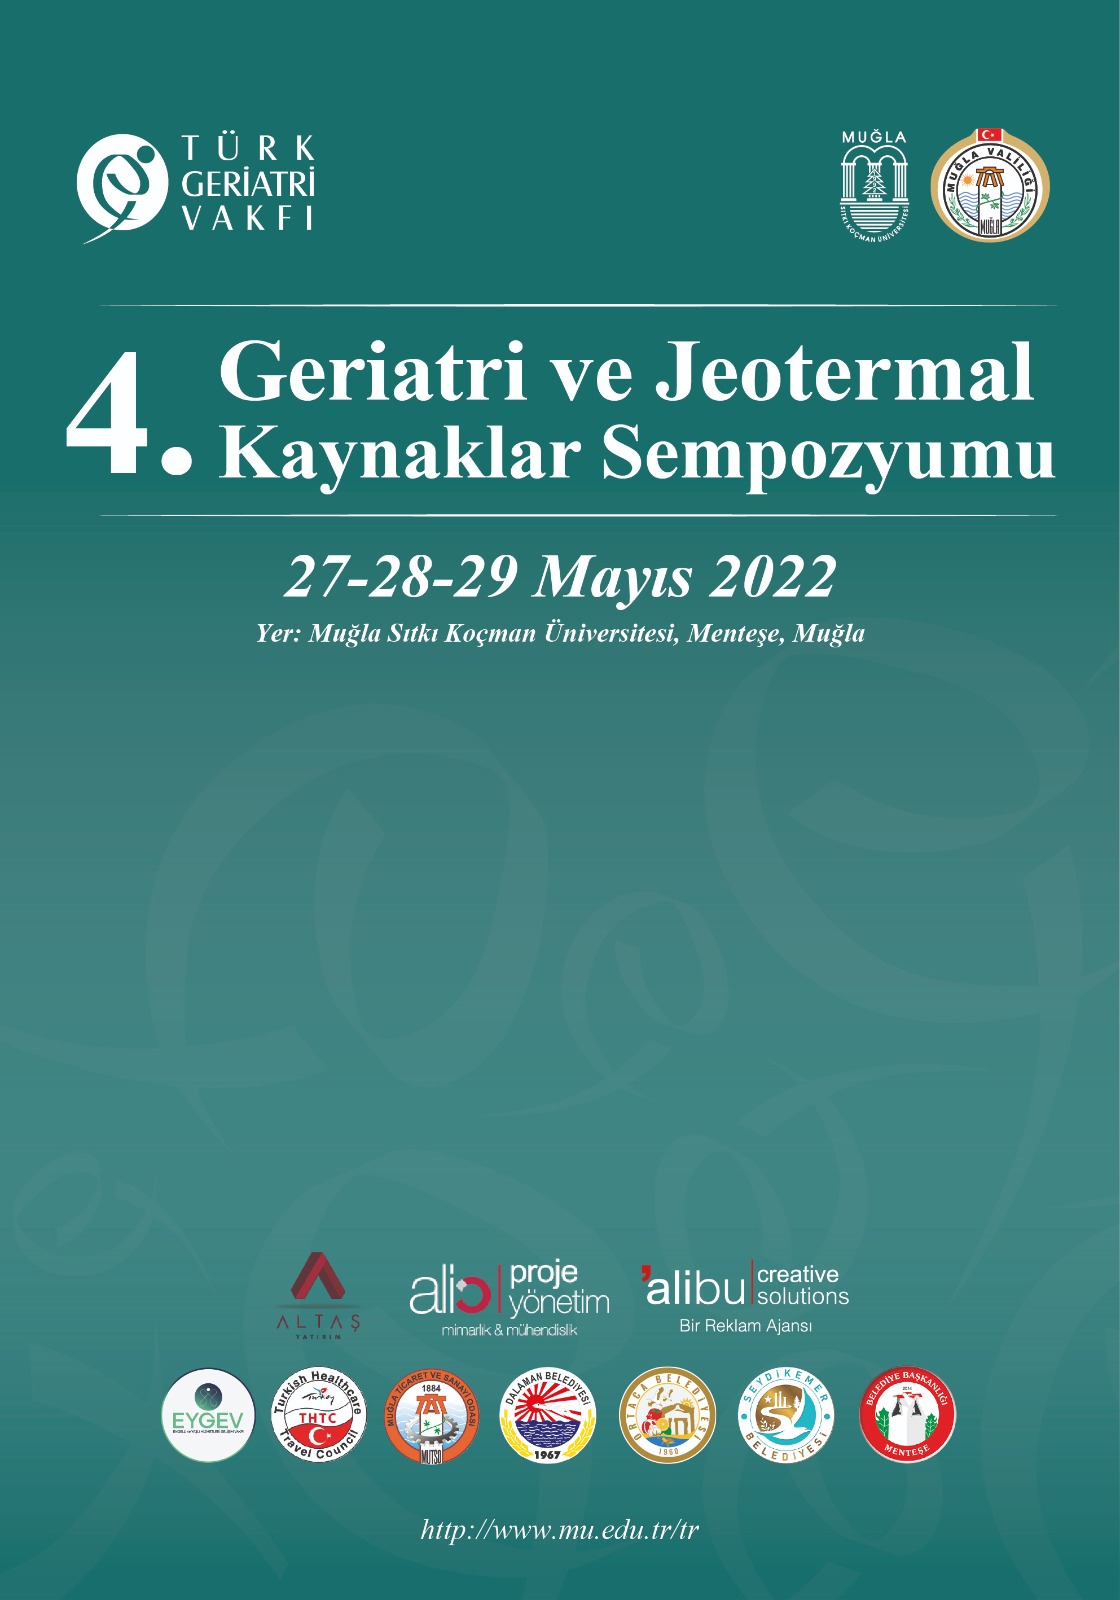 4. Geriatrics and Geothermal Resources Symposium